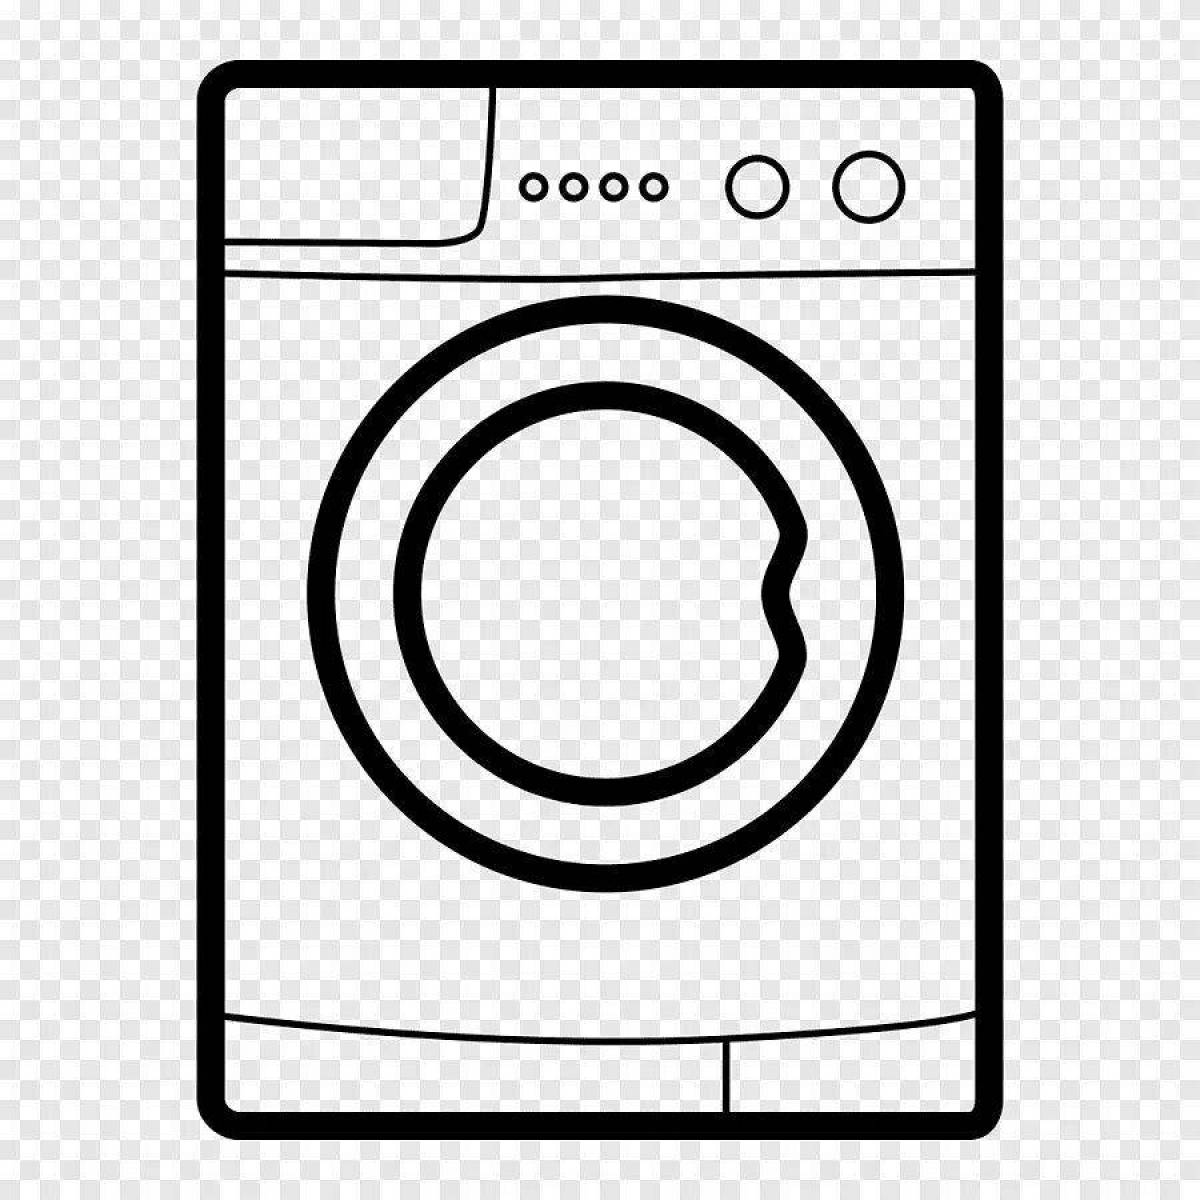 Unique washing machine coloring page